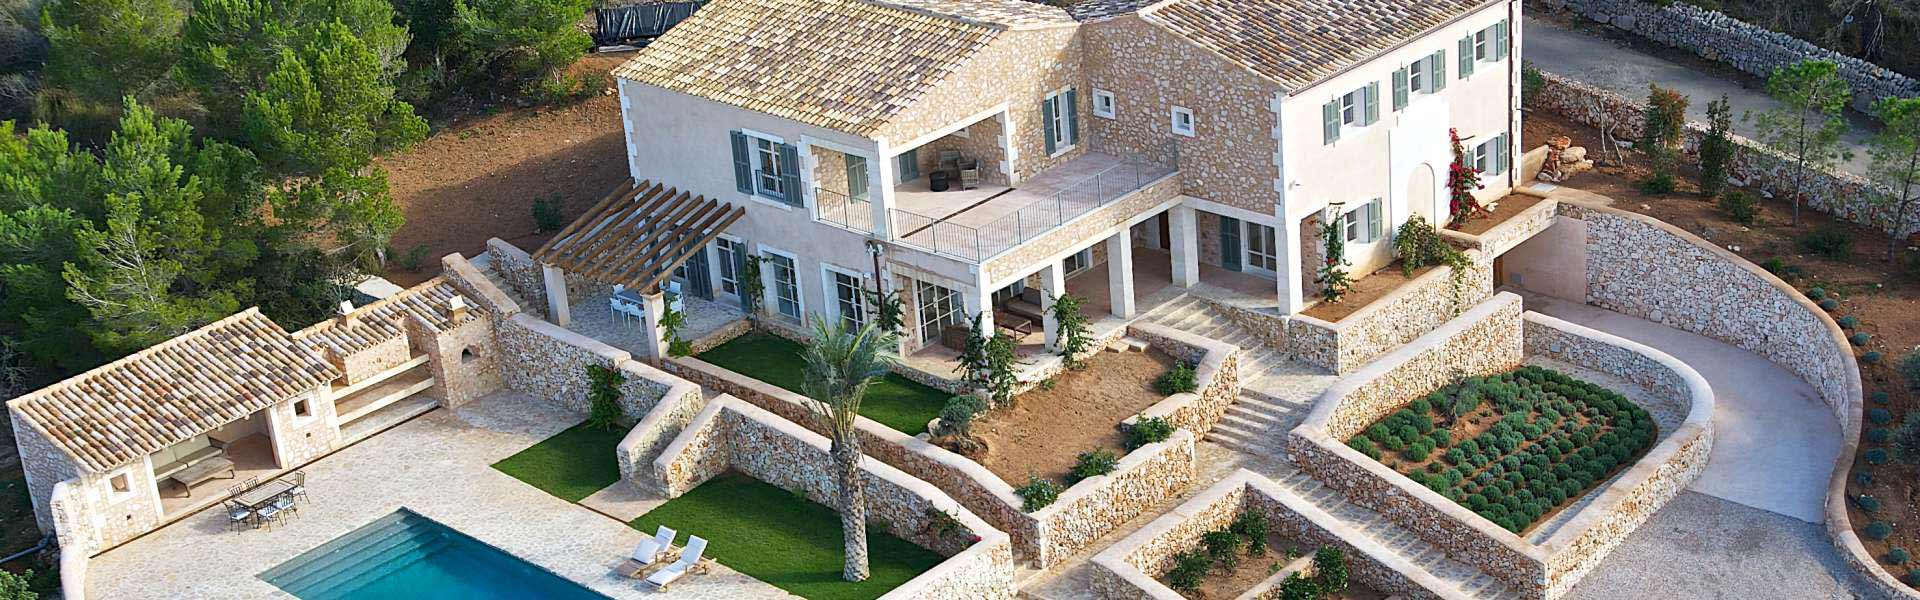 Montemar Immobilien Mallorca - Traumvilla mit Pool auf Mallorca